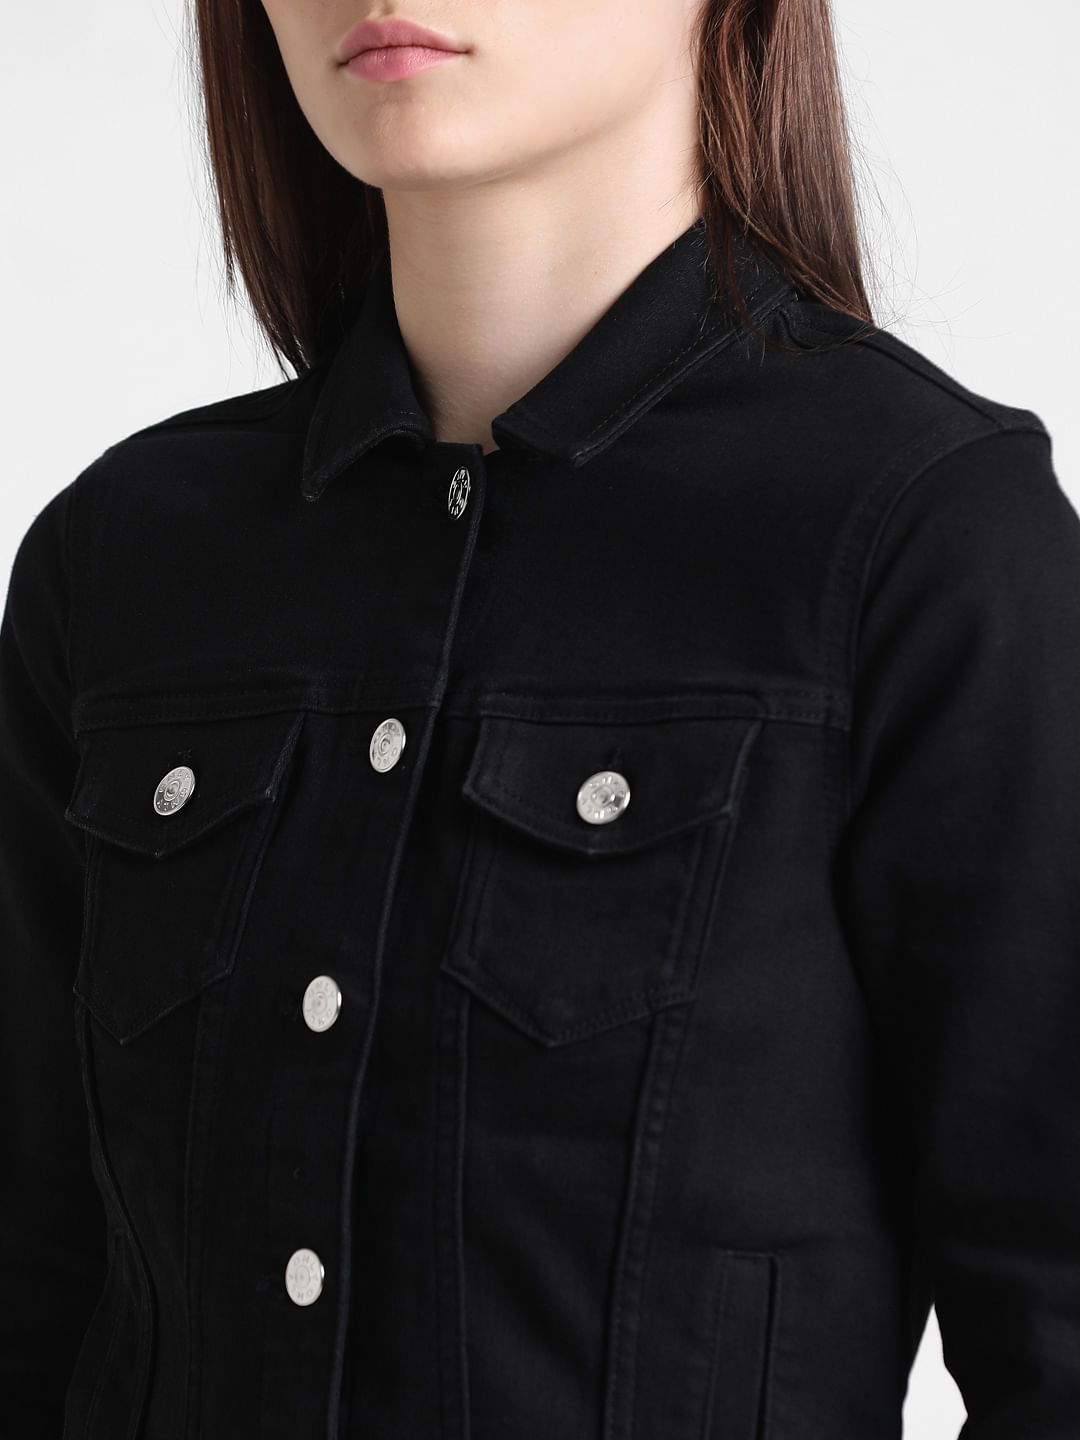 Buy Online|Spykar Women Black Regular Fit Classic Collar Denim Jacket